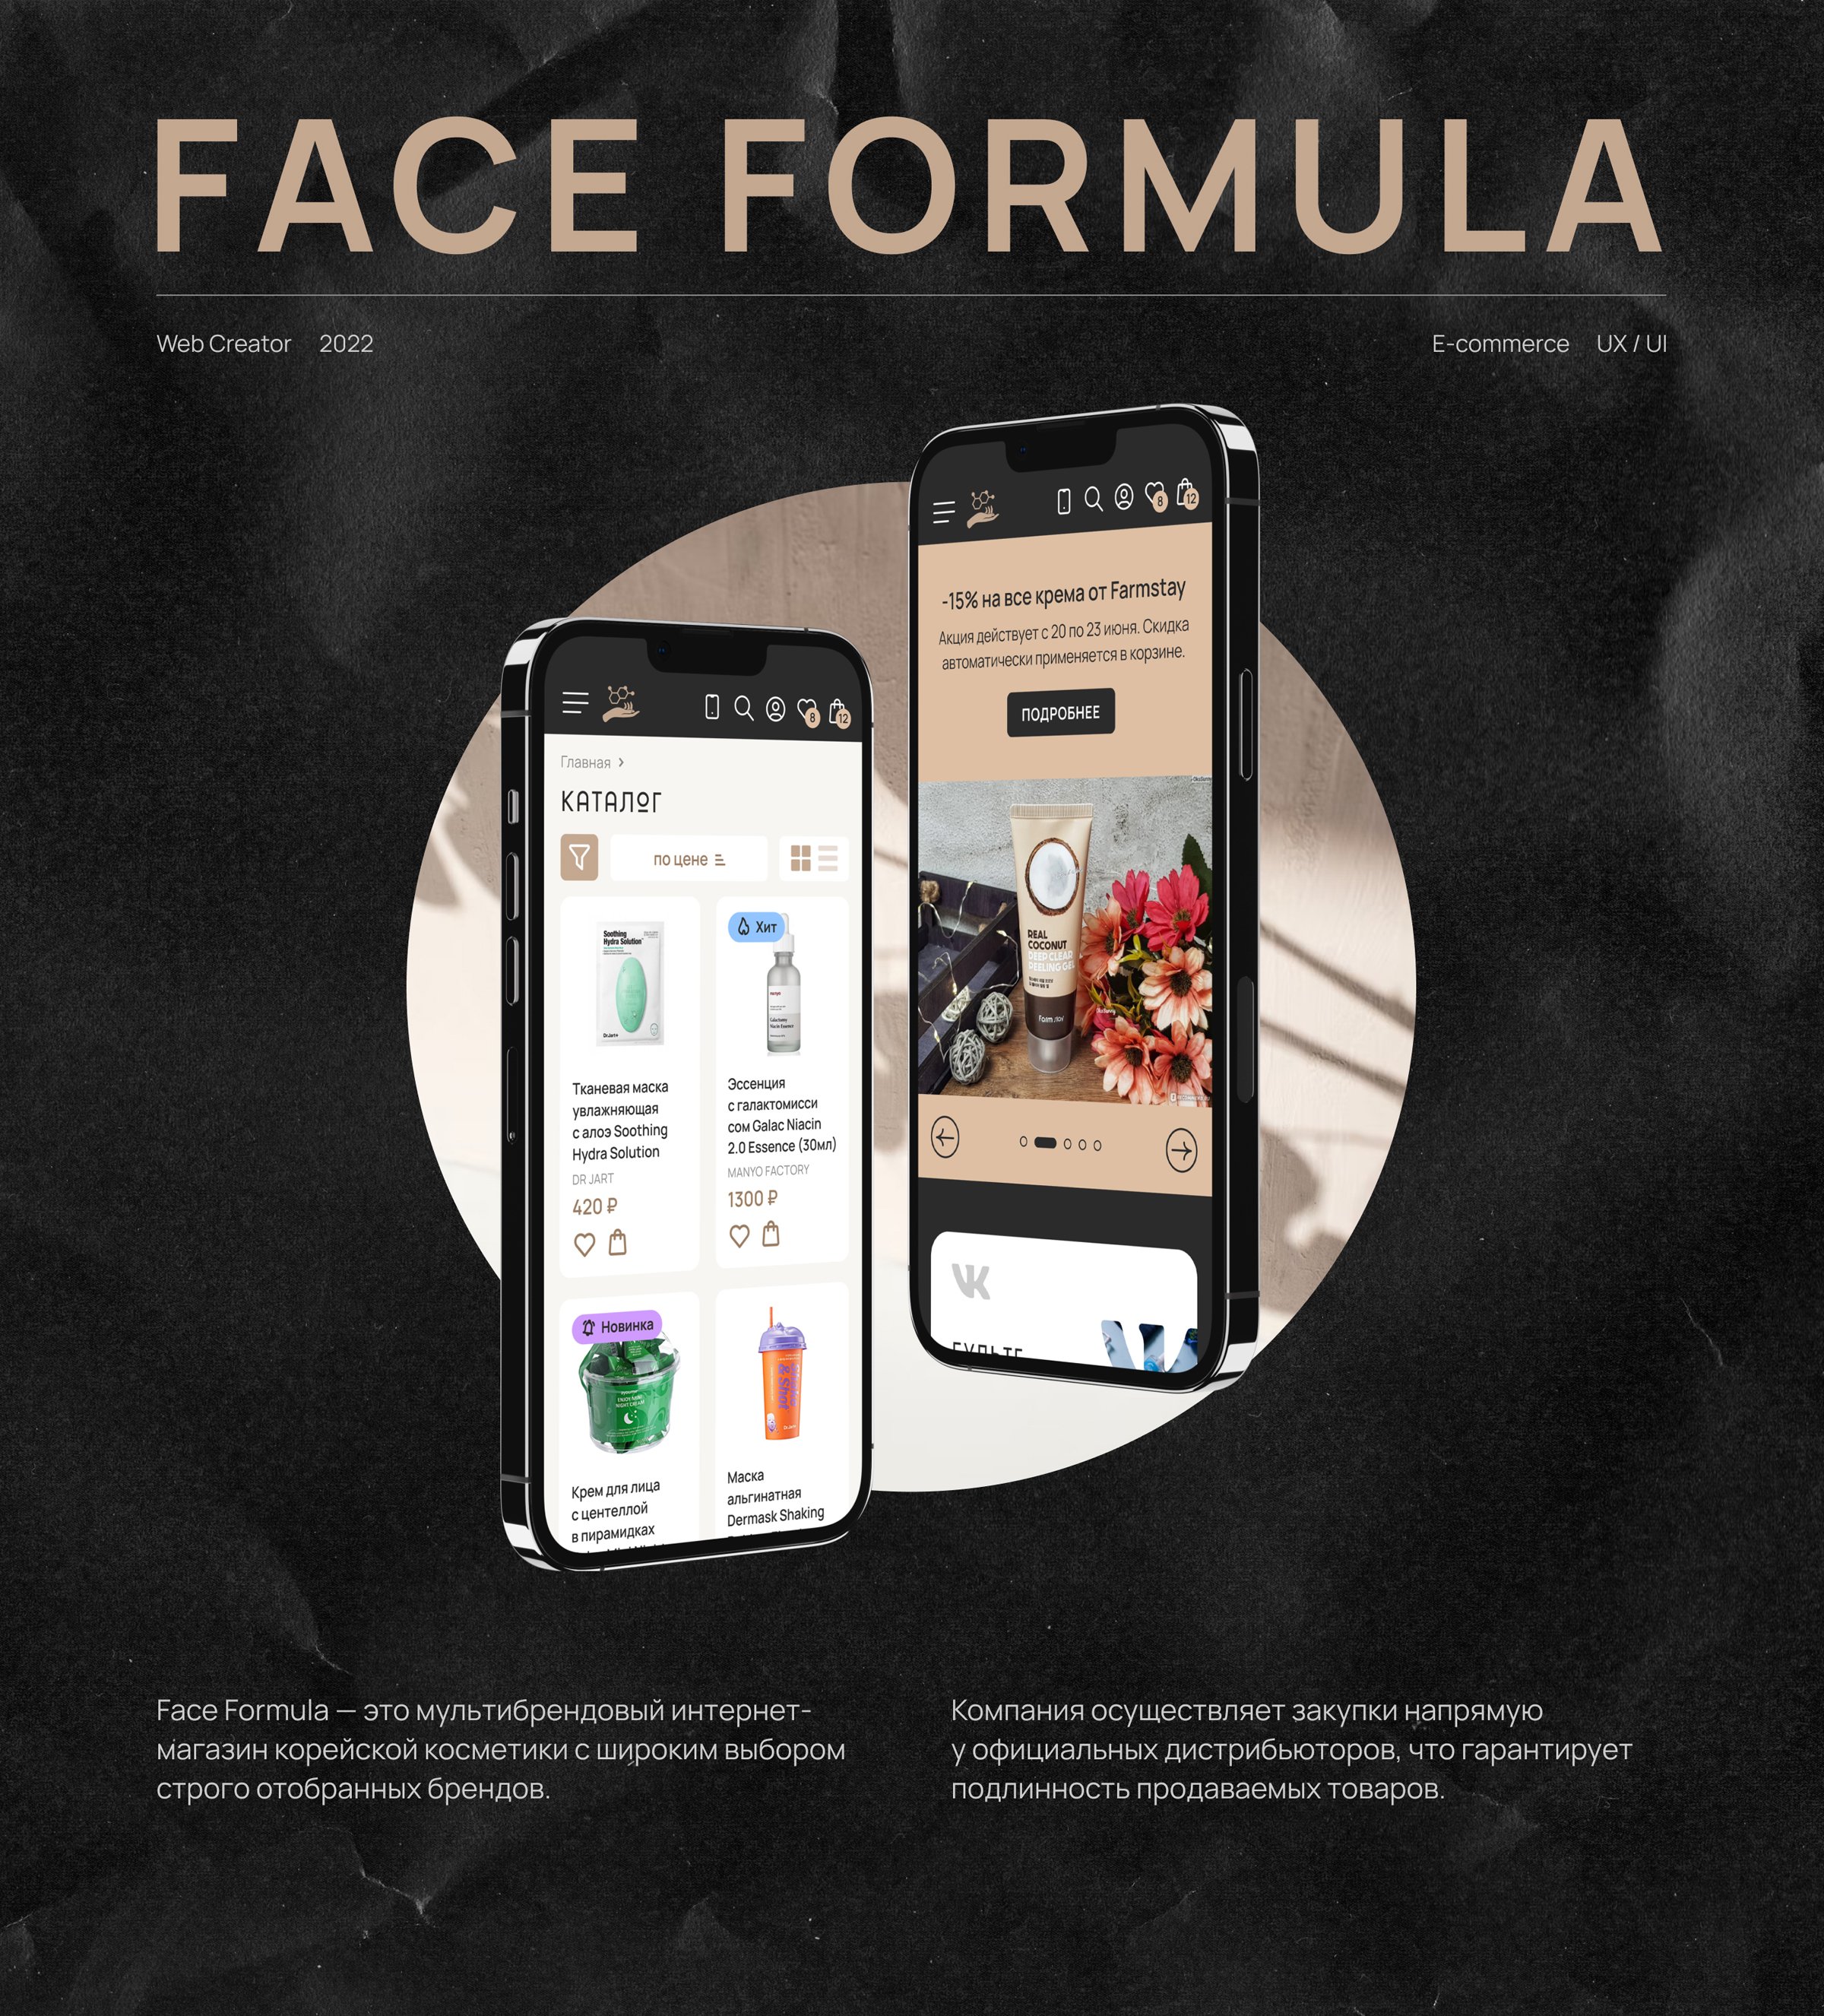 Face Formula